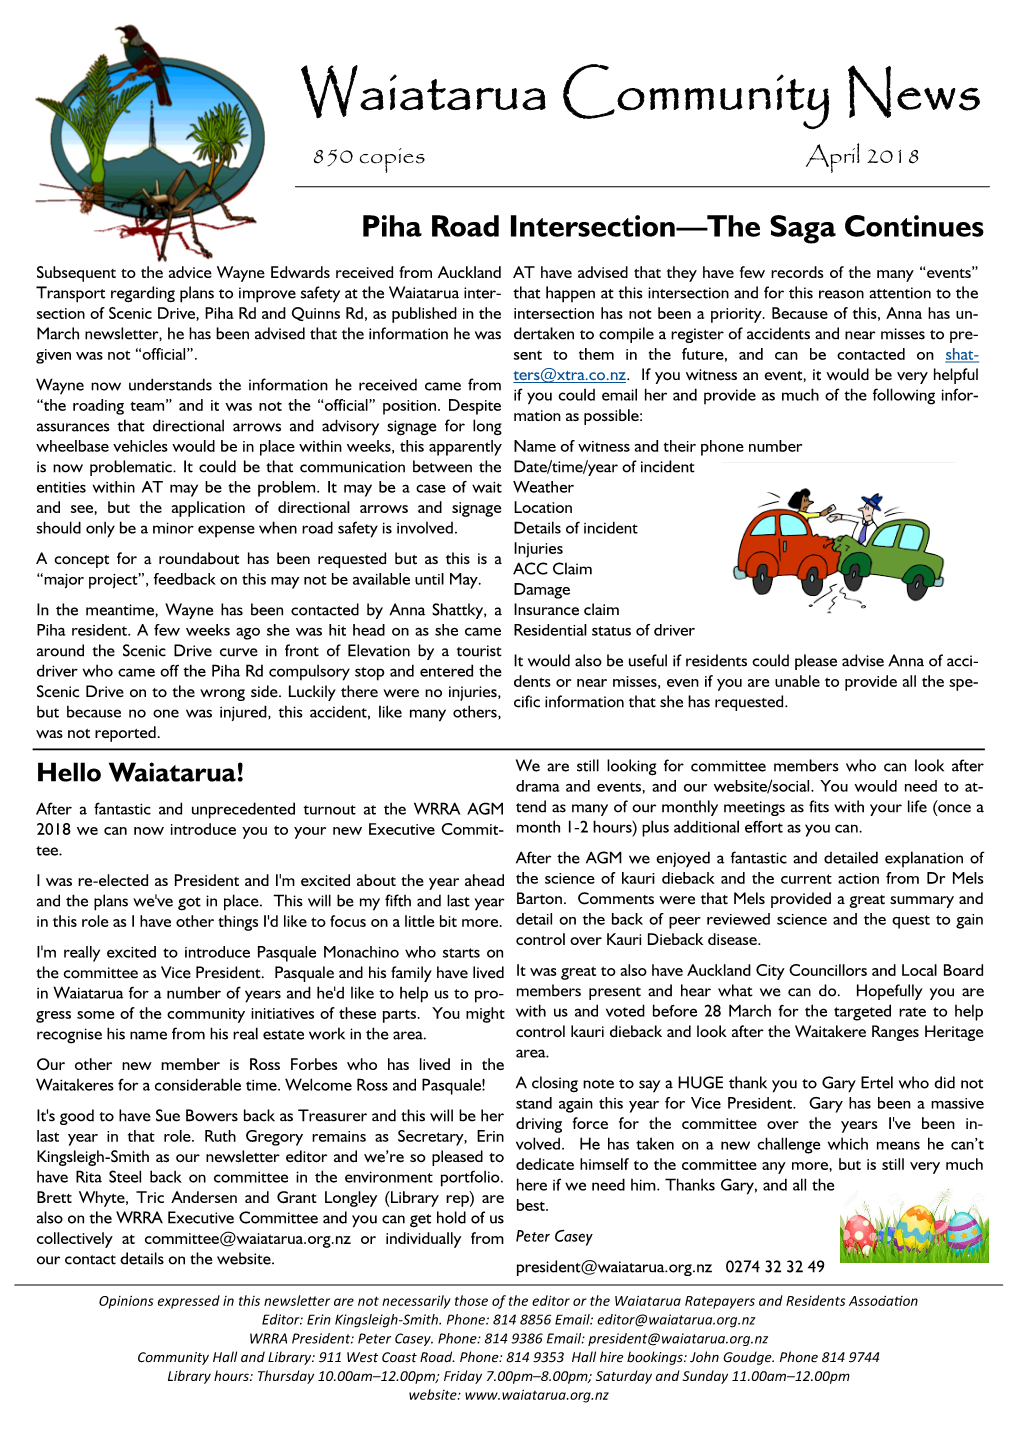 Piha Road Intersection—The Saga Continues